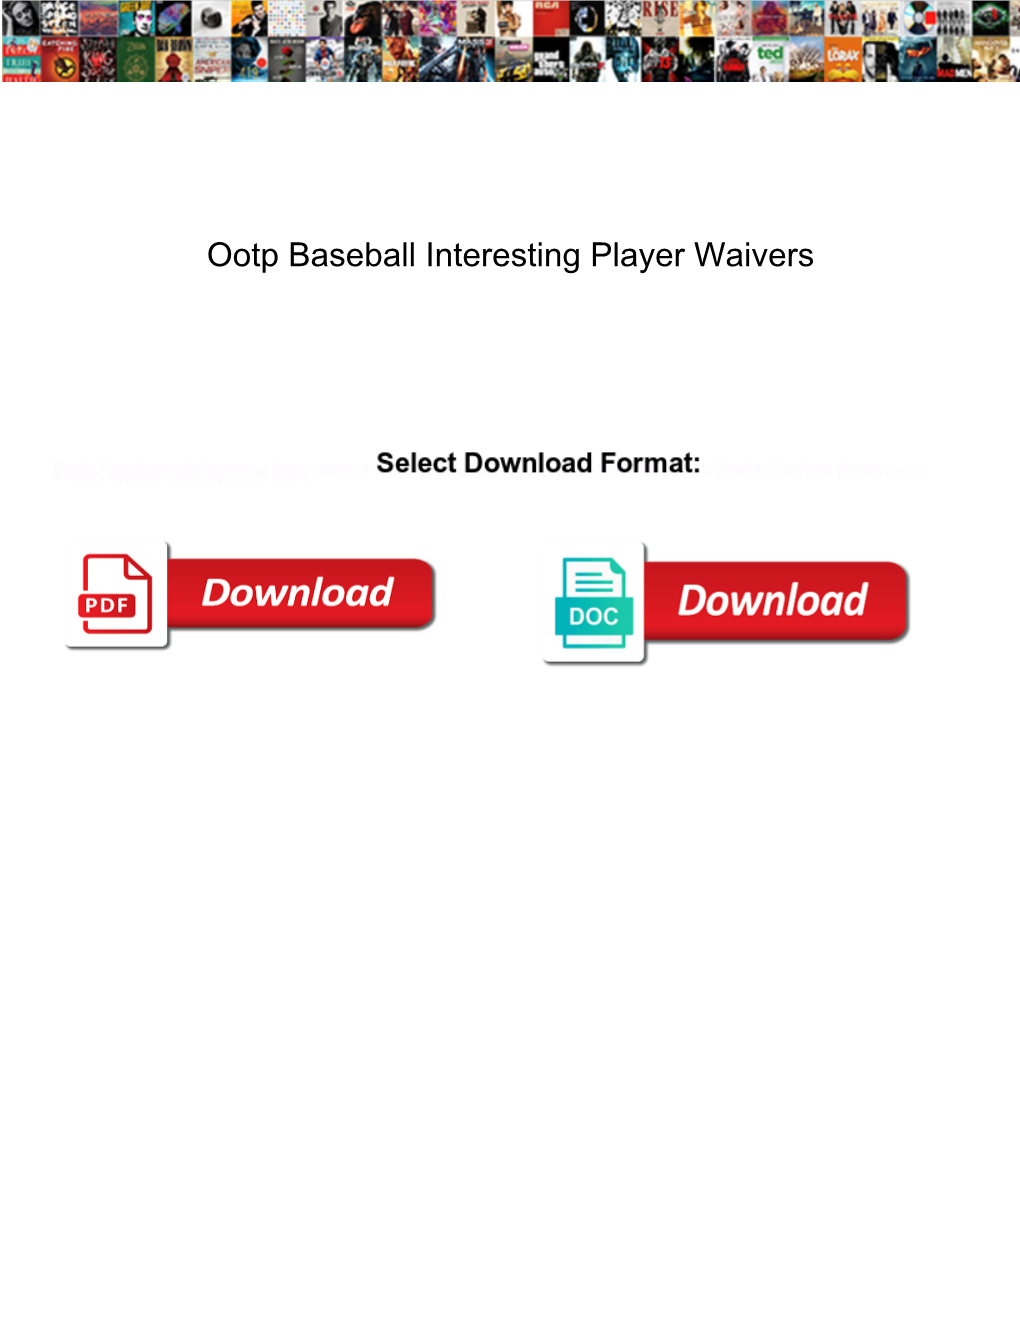 Ootp Baseball Interesting Player Waivers